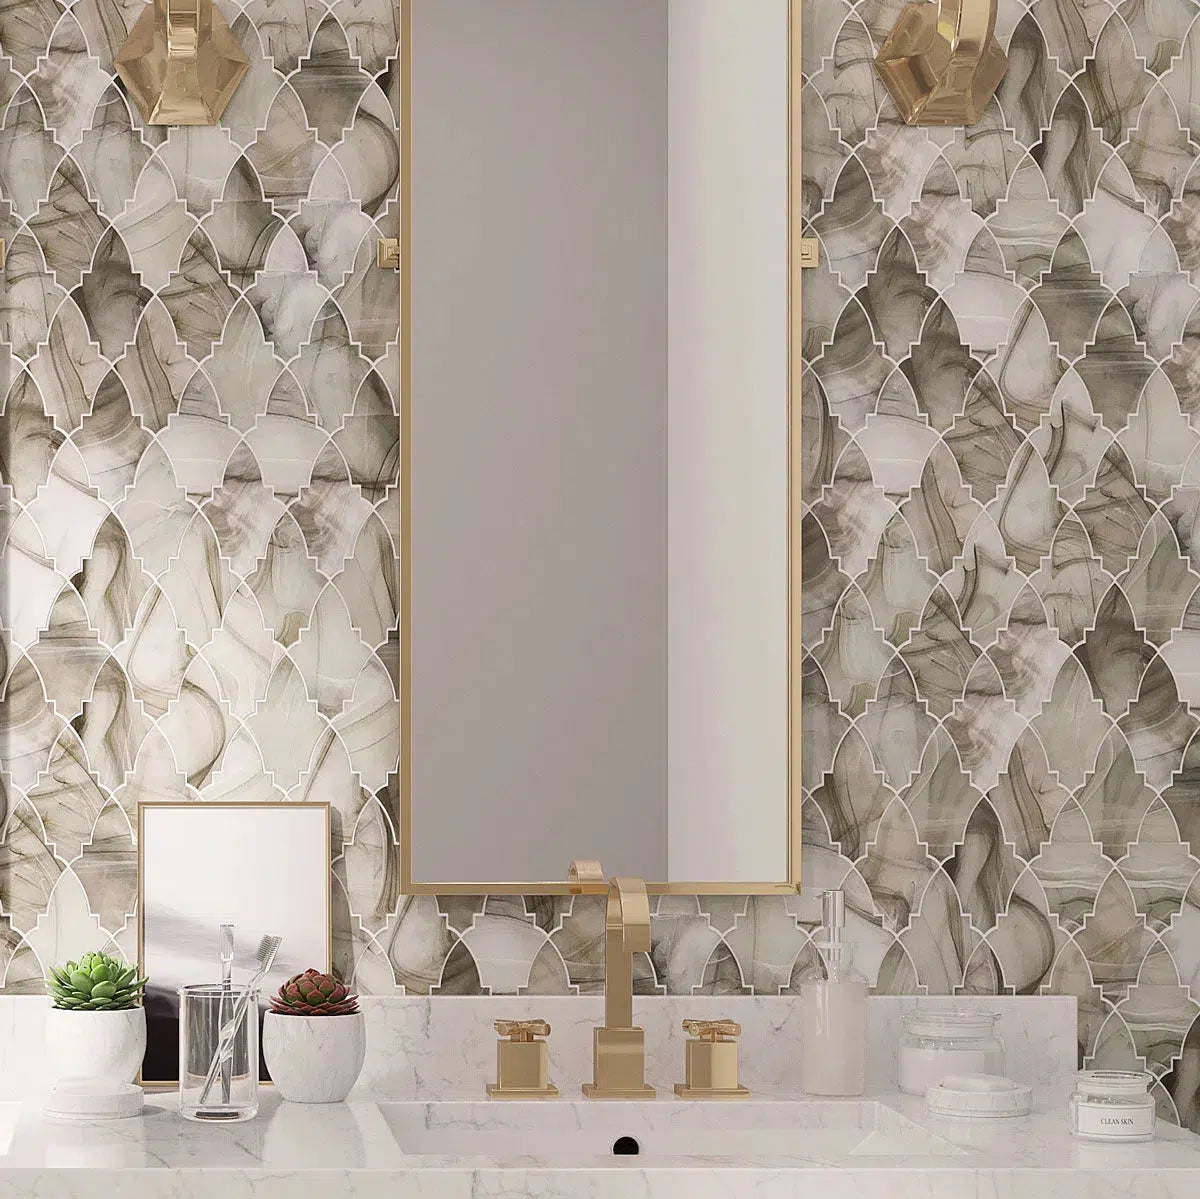 Sea Glass patterned tiles for a luxurious bathroom vanity backsplash